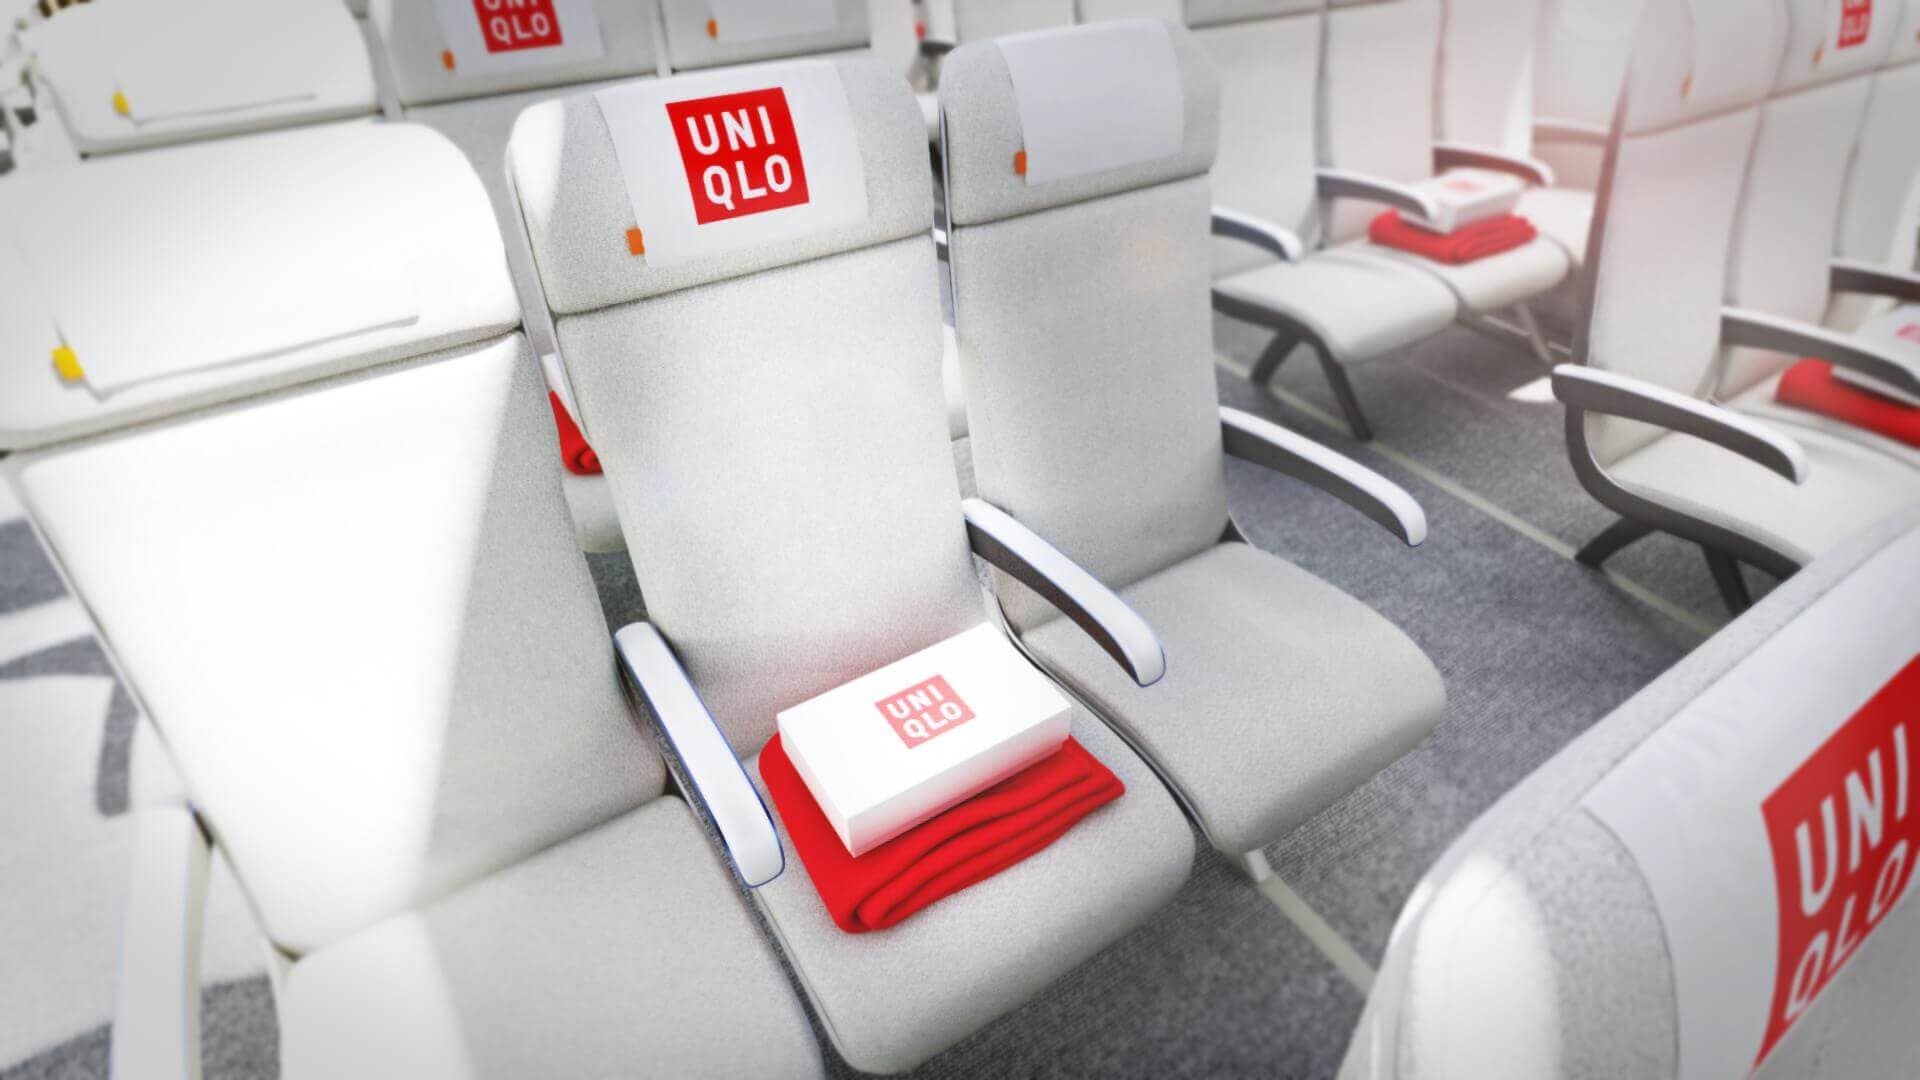 White airplane seat with Uniqlo branding